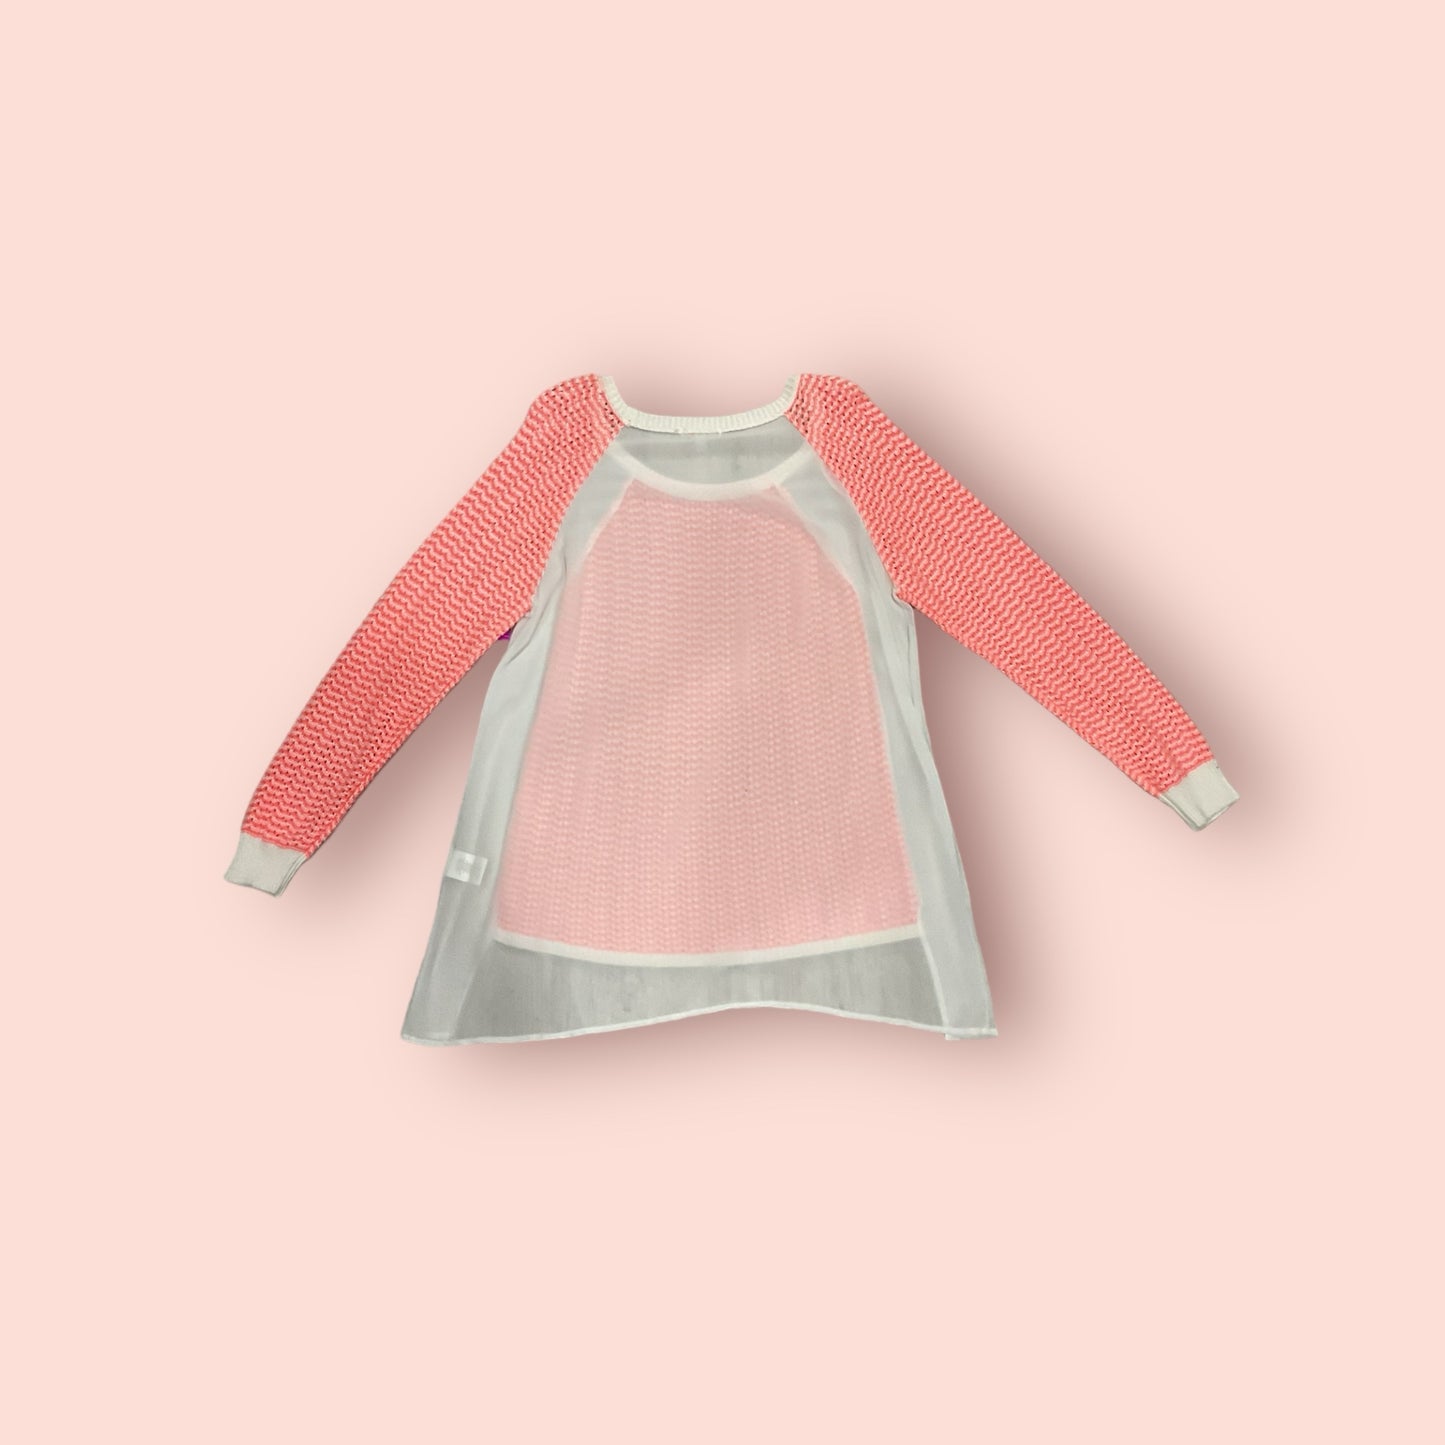 GB Size XL Like New Pink Sweater